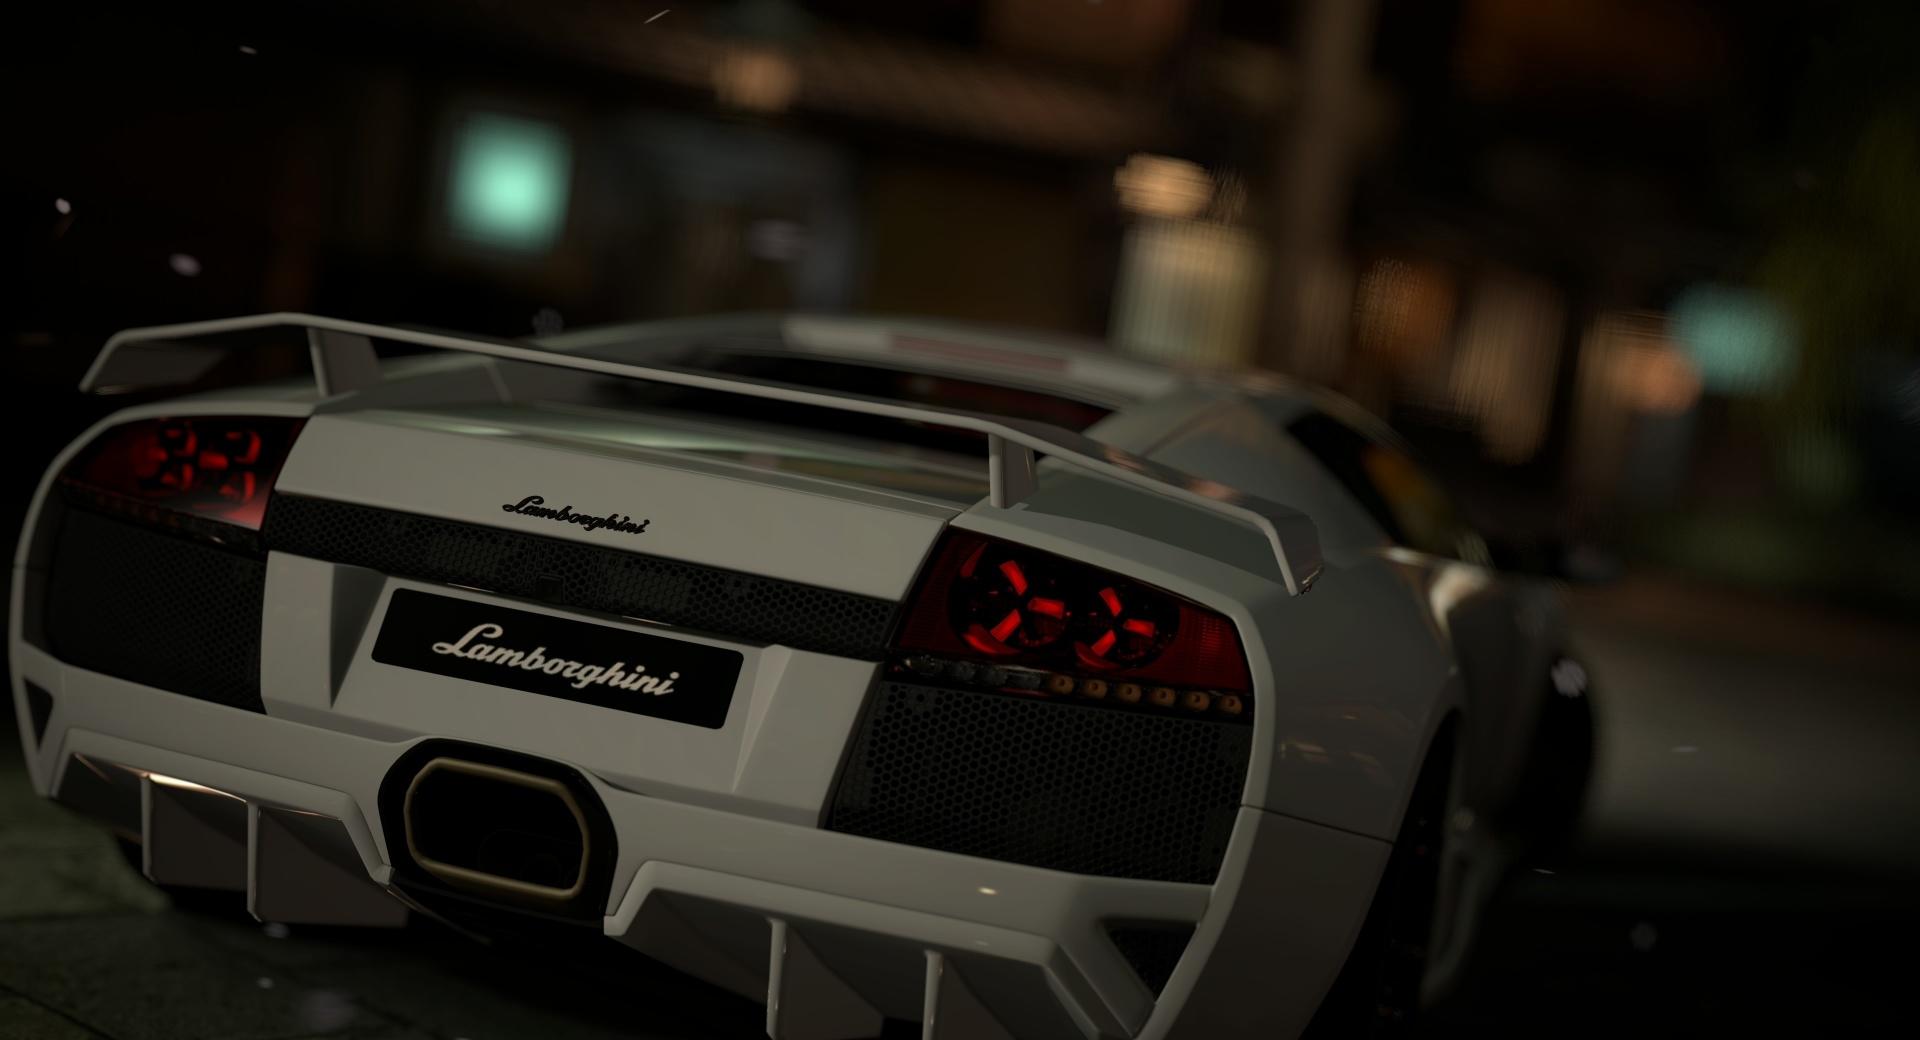 Lamborghini Murcilago Rear at 1600 x 1200 size wallpapers HD quality